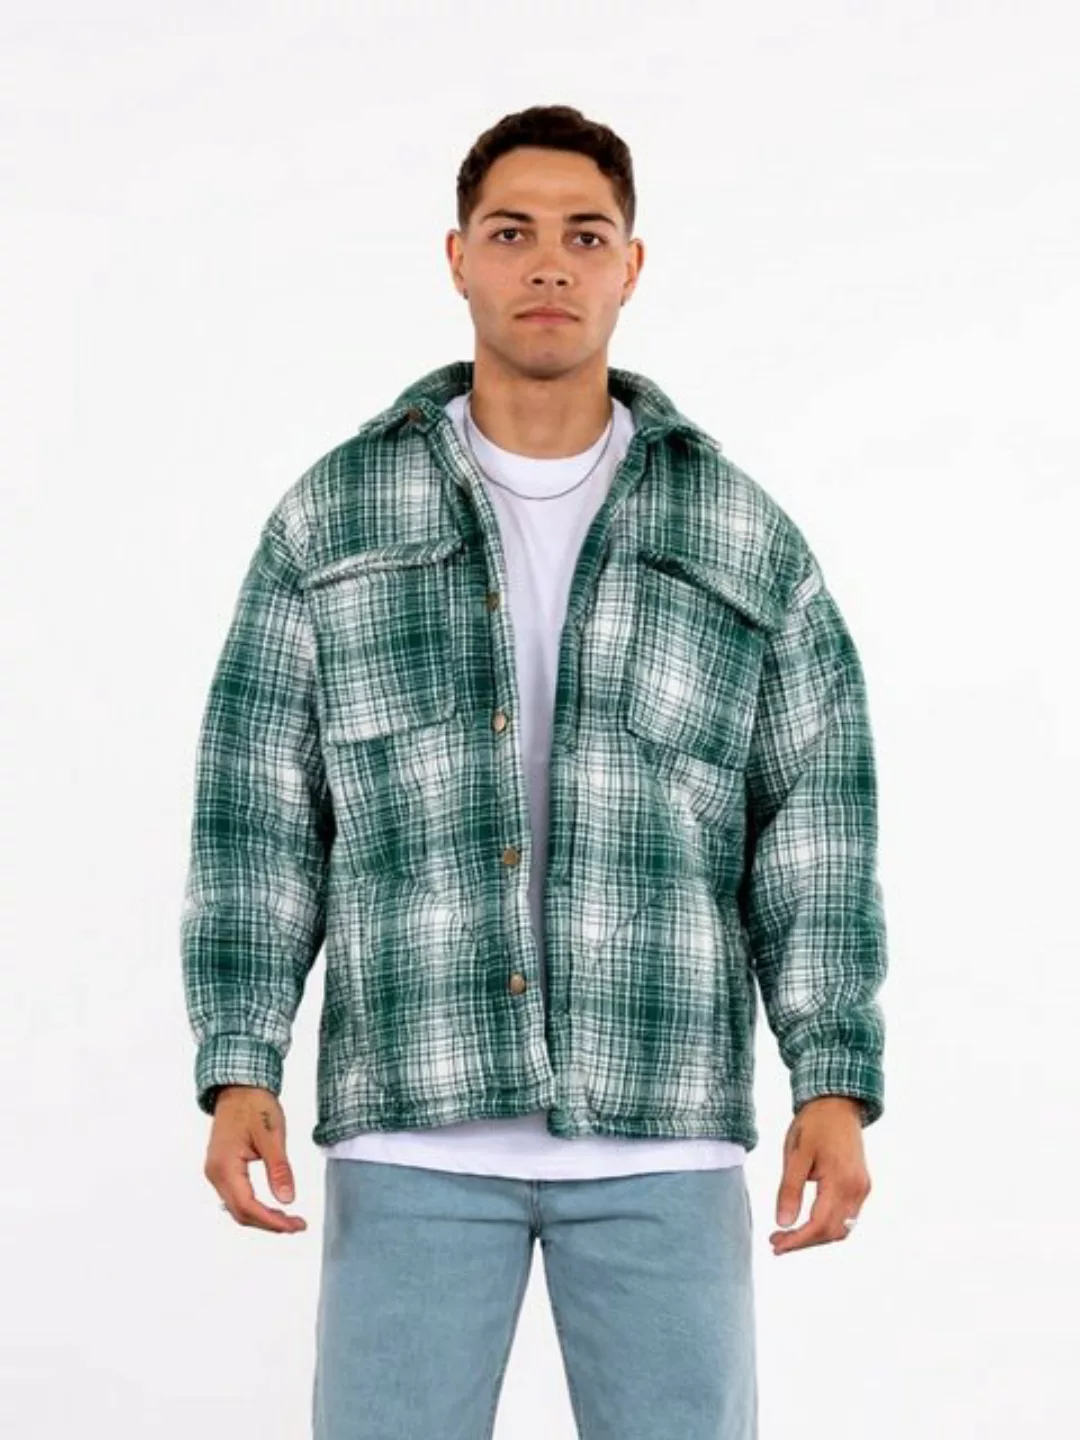 COFI Casuals Hemdjacke Lumberjacket Jacket Kapitone Herren Flanelljacke kar günstig online kaufen